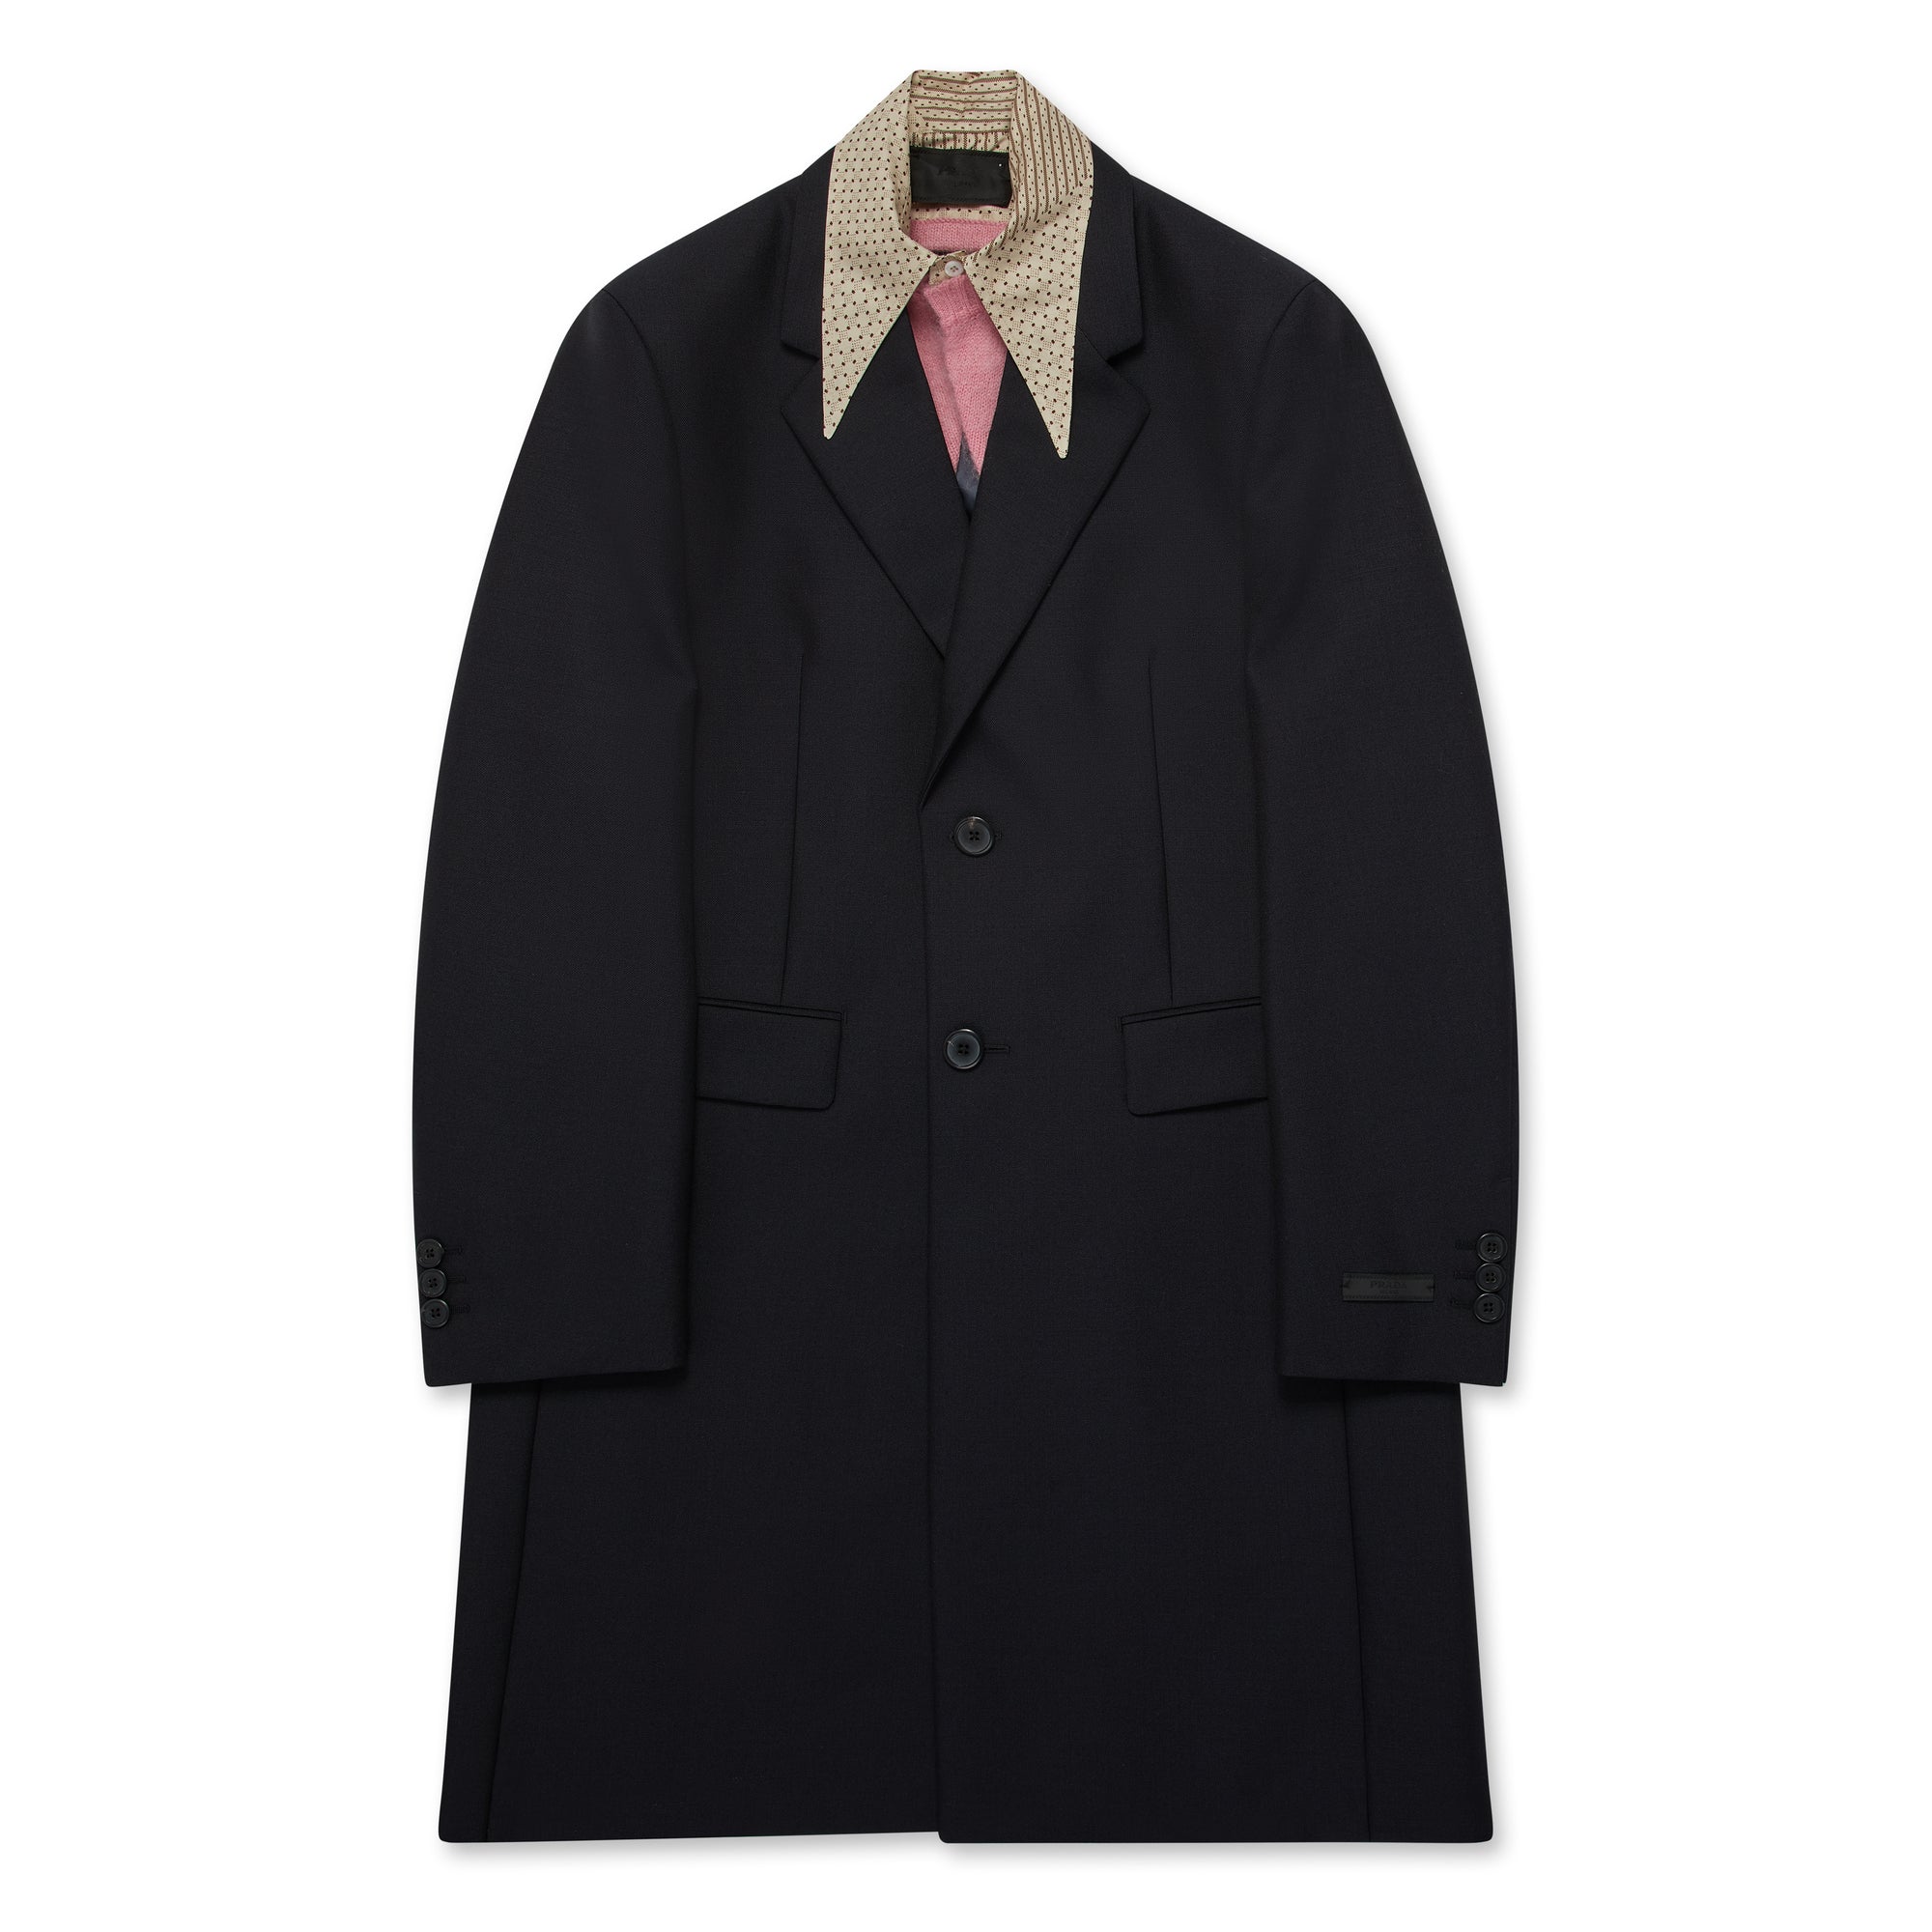 Prada - Men's Coat With Detachable Collar - (Black) view 1